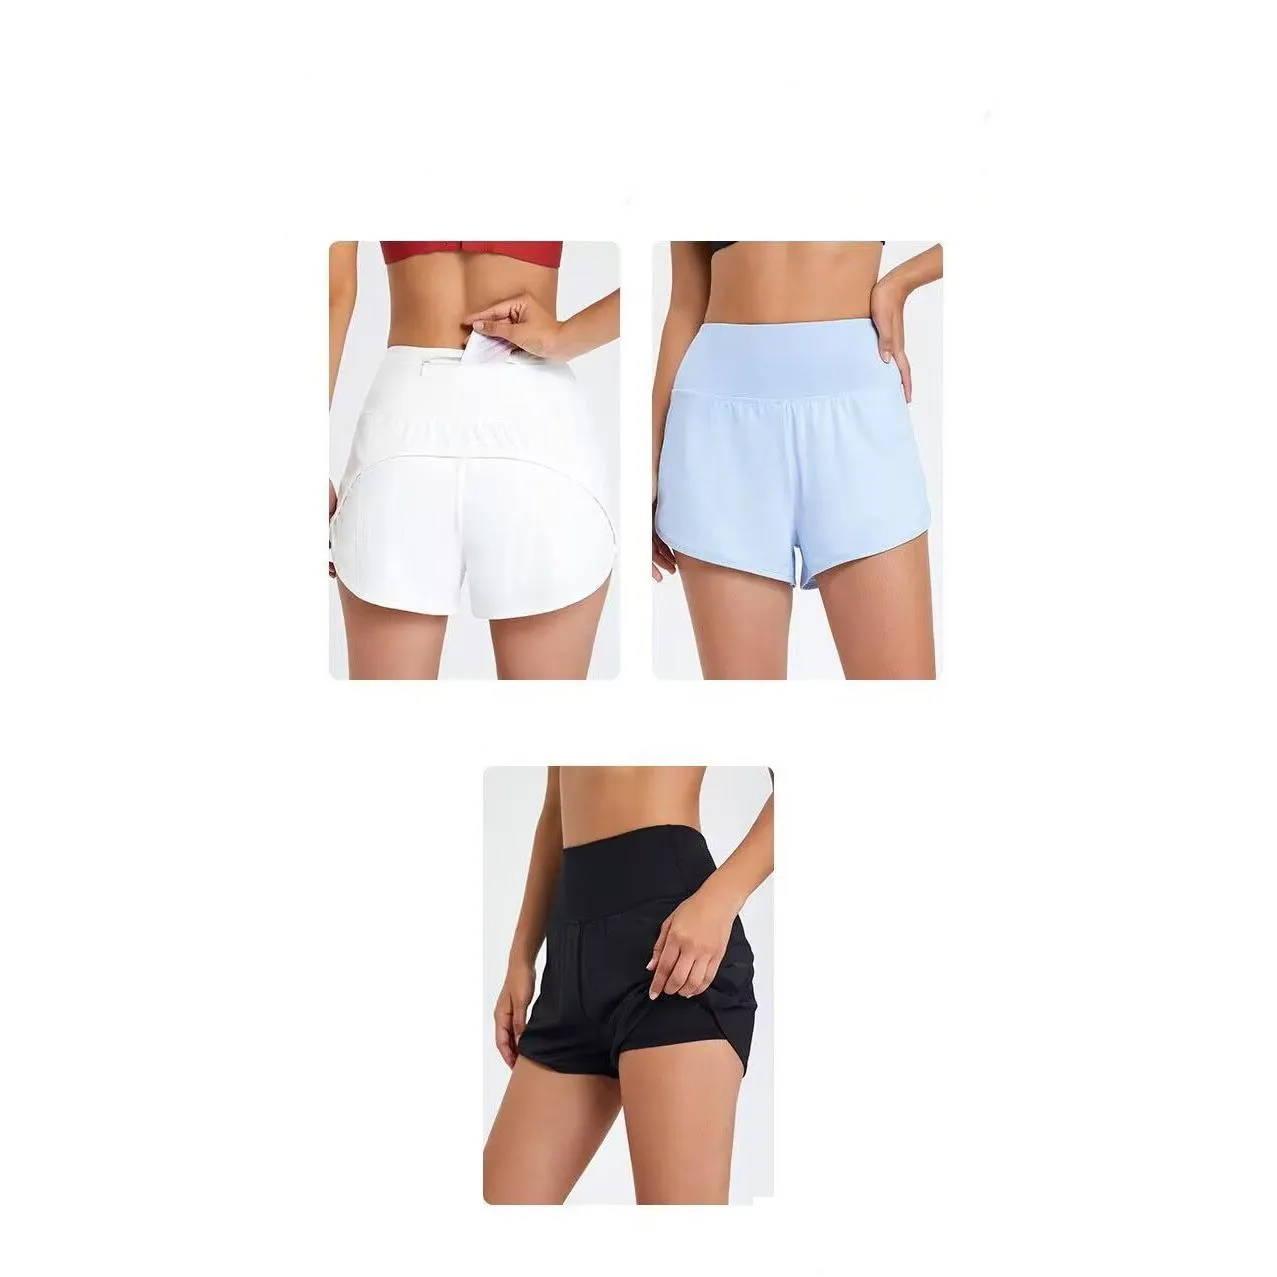 Mulheres Plus Size Calças Moda Designer Shorts Para Mulheres Cintura Alta Secagem Rápida Yoga Running Drop Delivery Vestuário Otsca